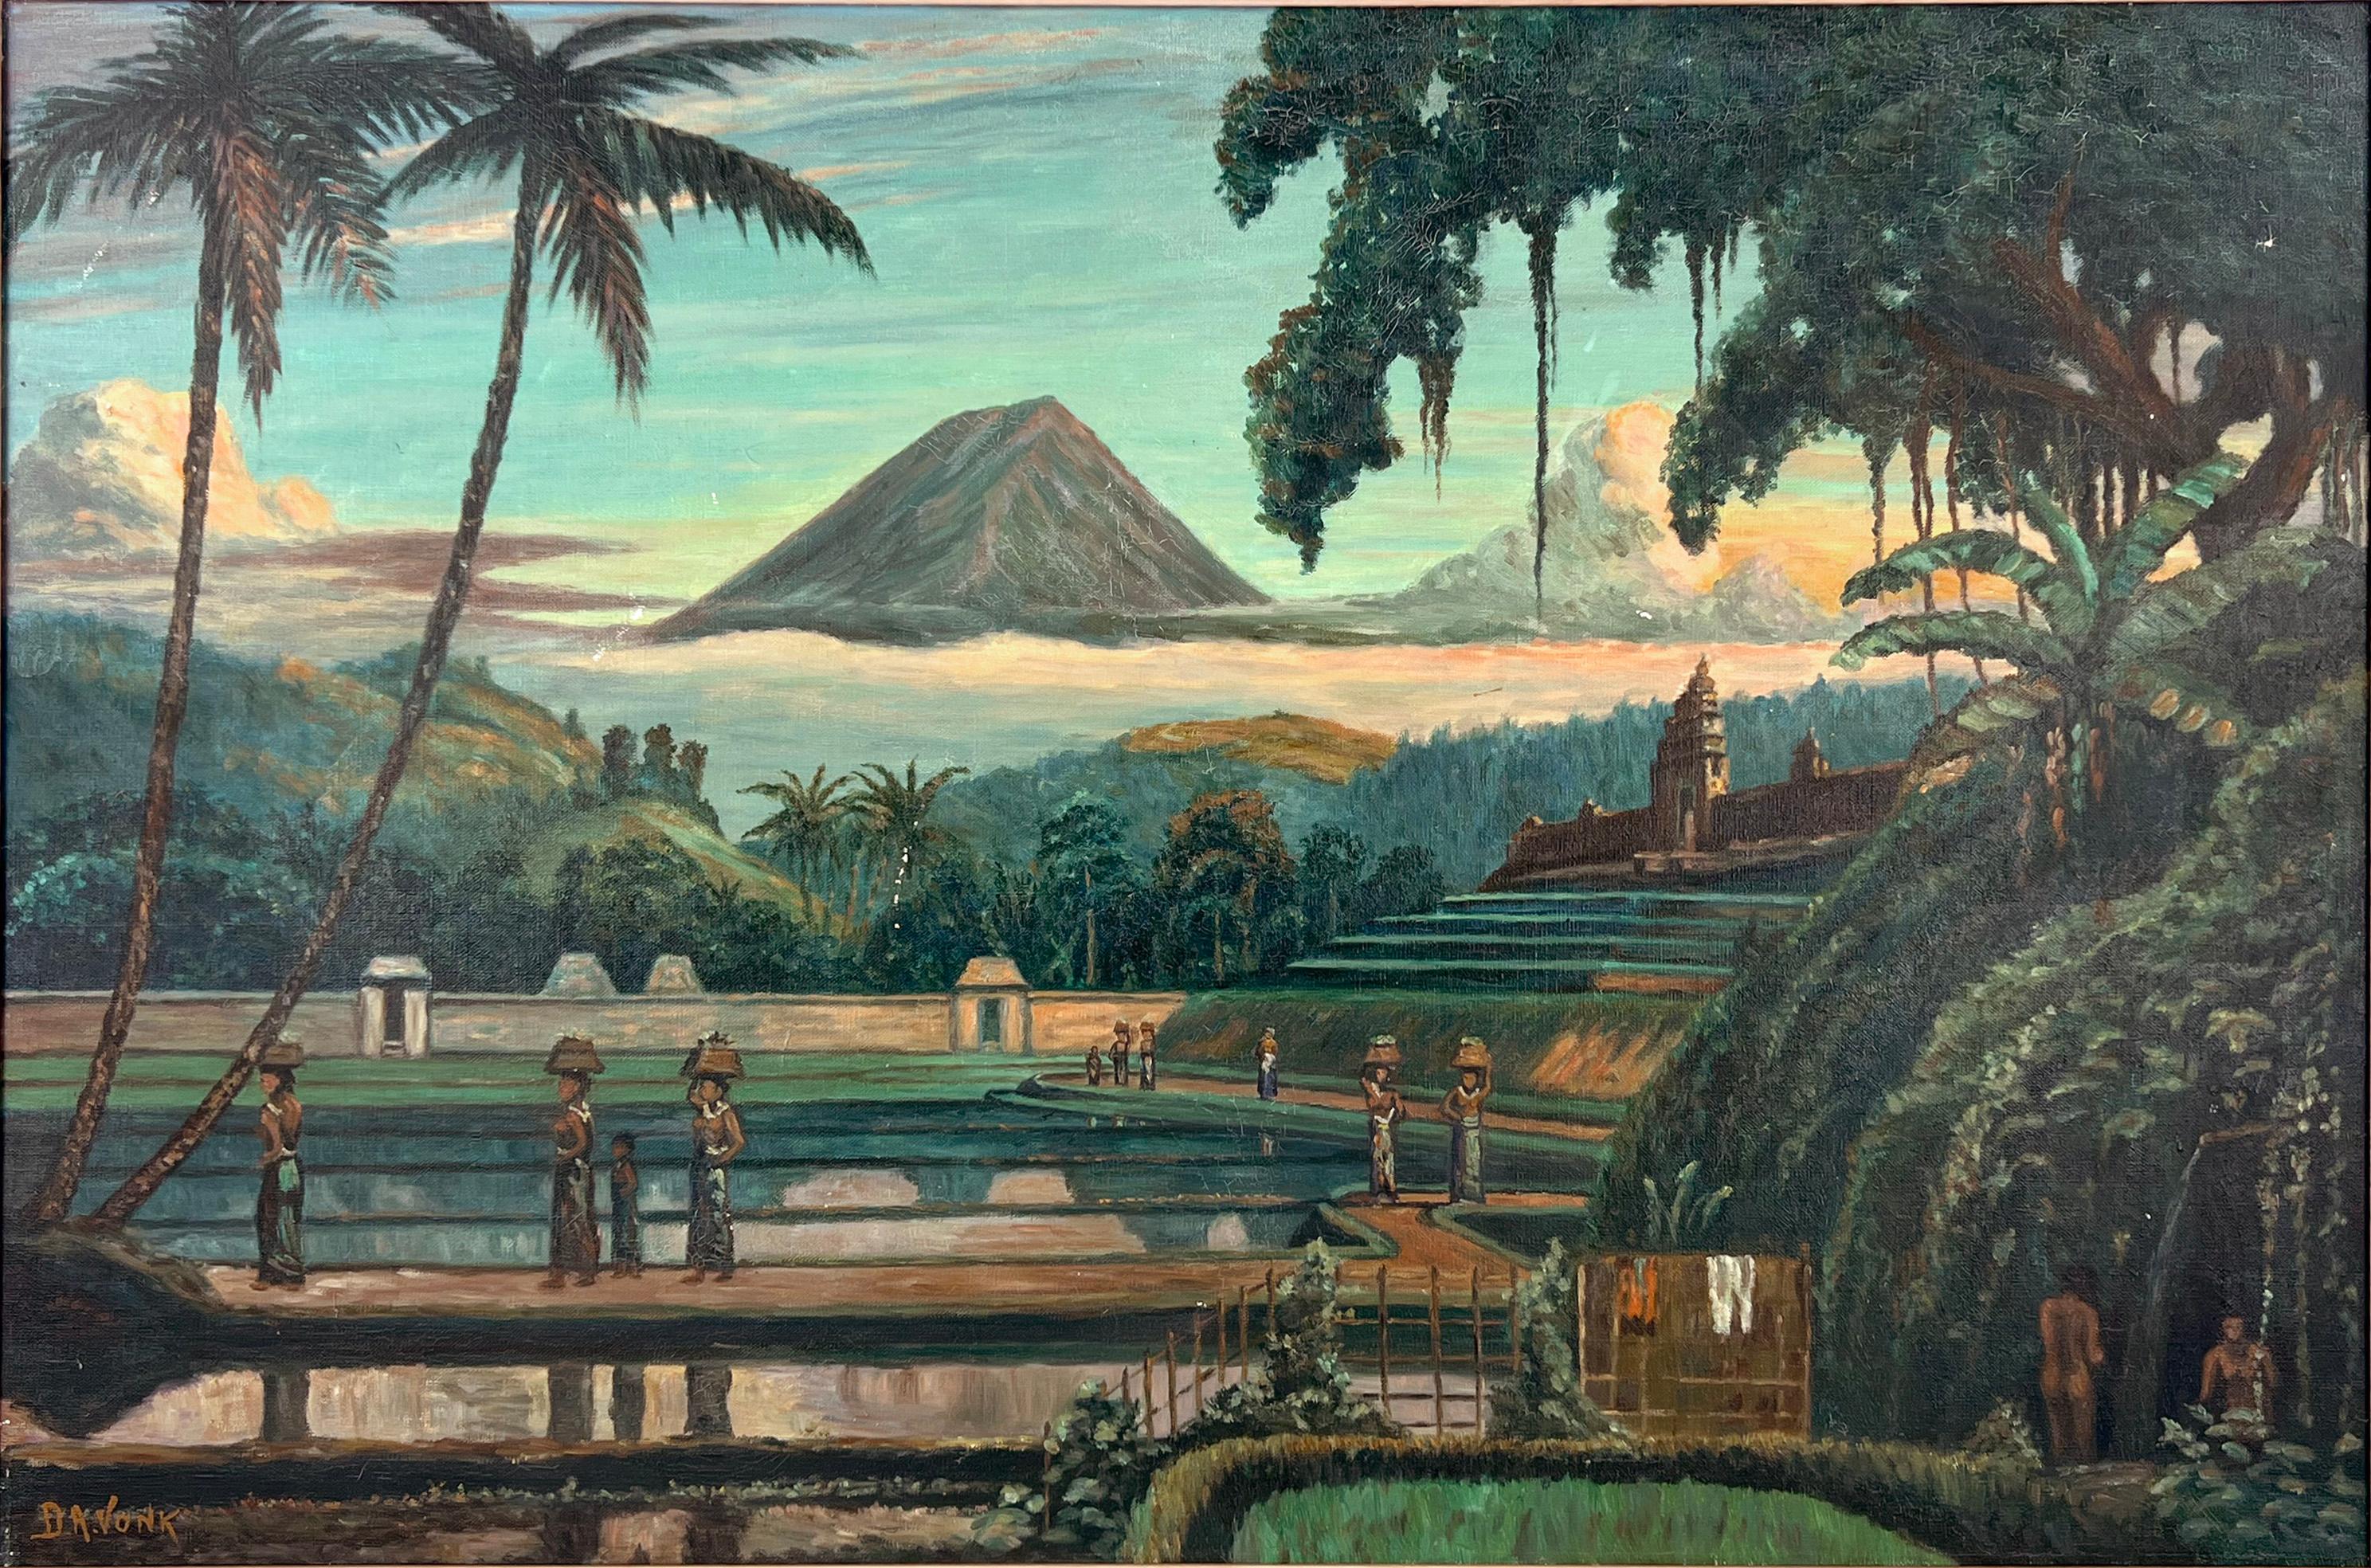 Mount Sumbing ou Gunung Sumbing, un volcan actif au centre de la Java, en Indonésie - Painting de D. A. Vonk